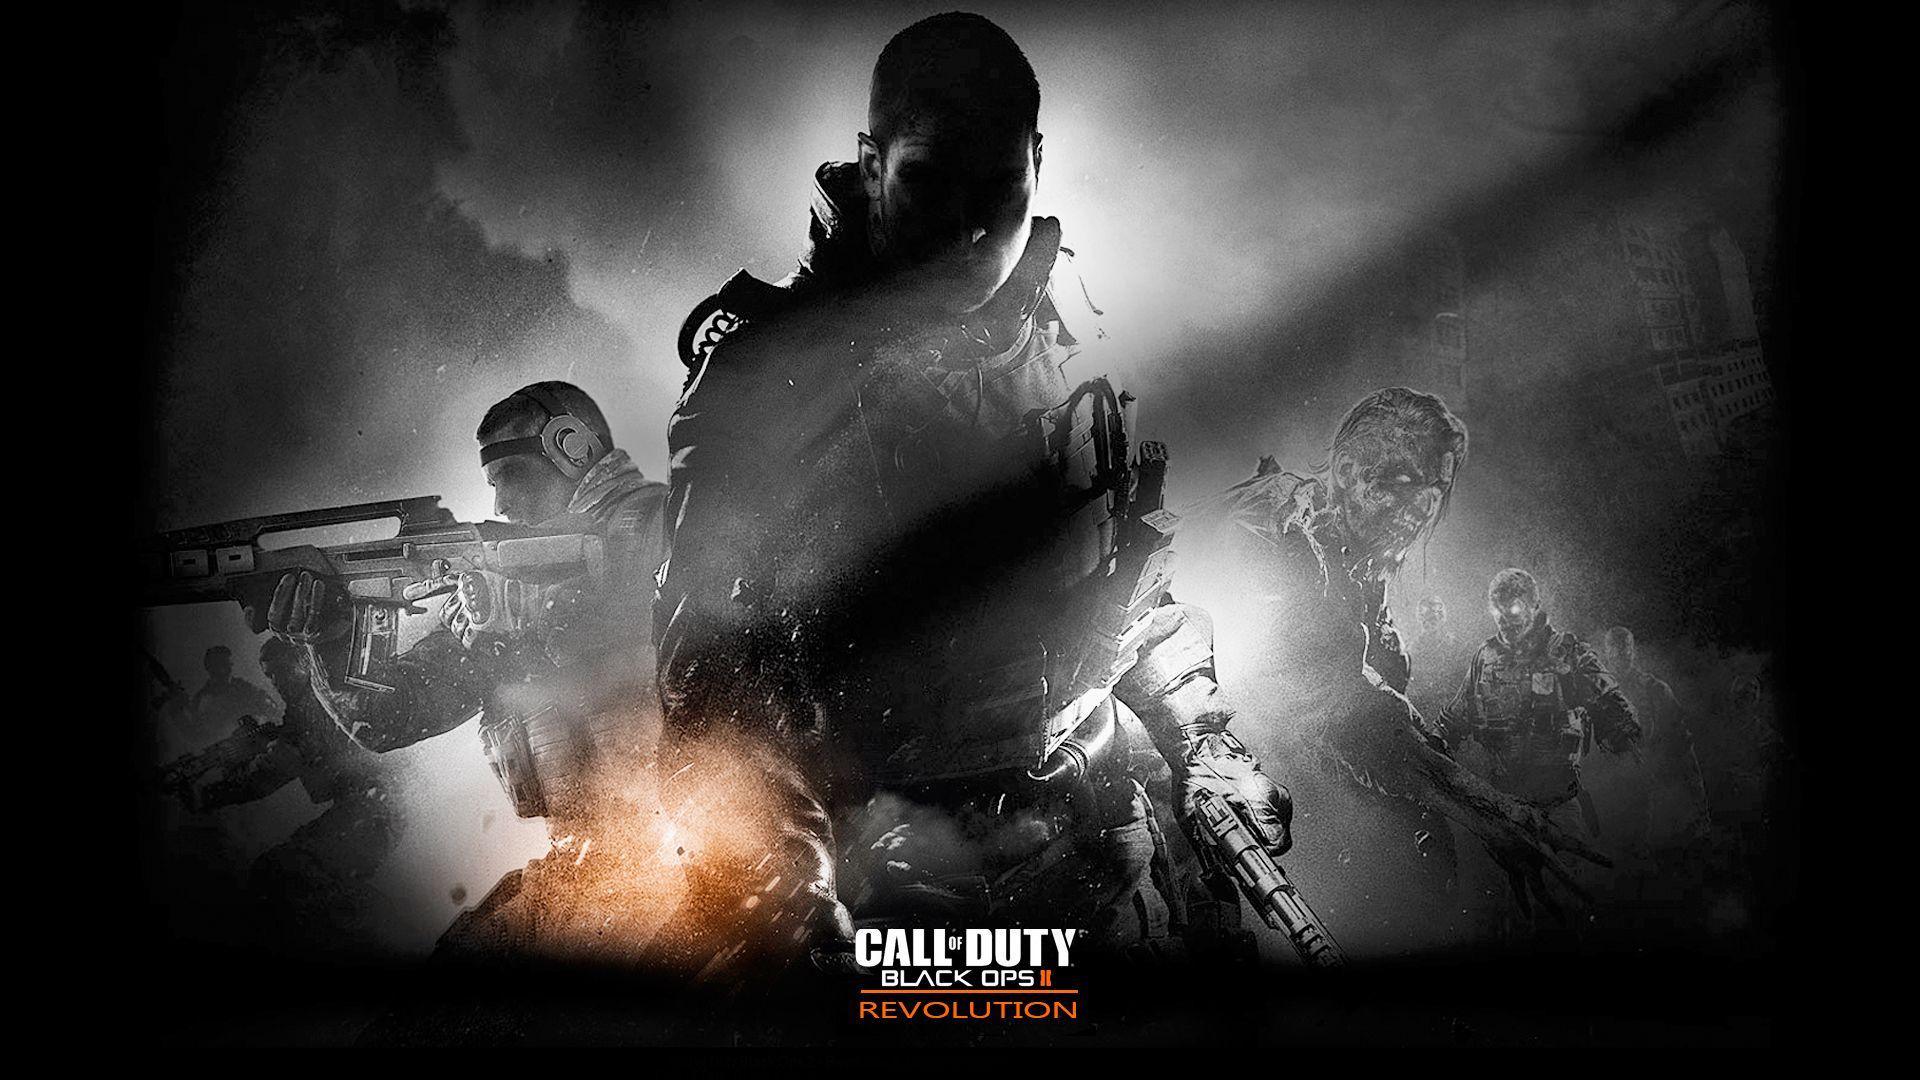 Call Of Duty Black Ops 2 Revolution Wallpaper. Call of duty black, Call of duty, Black ops